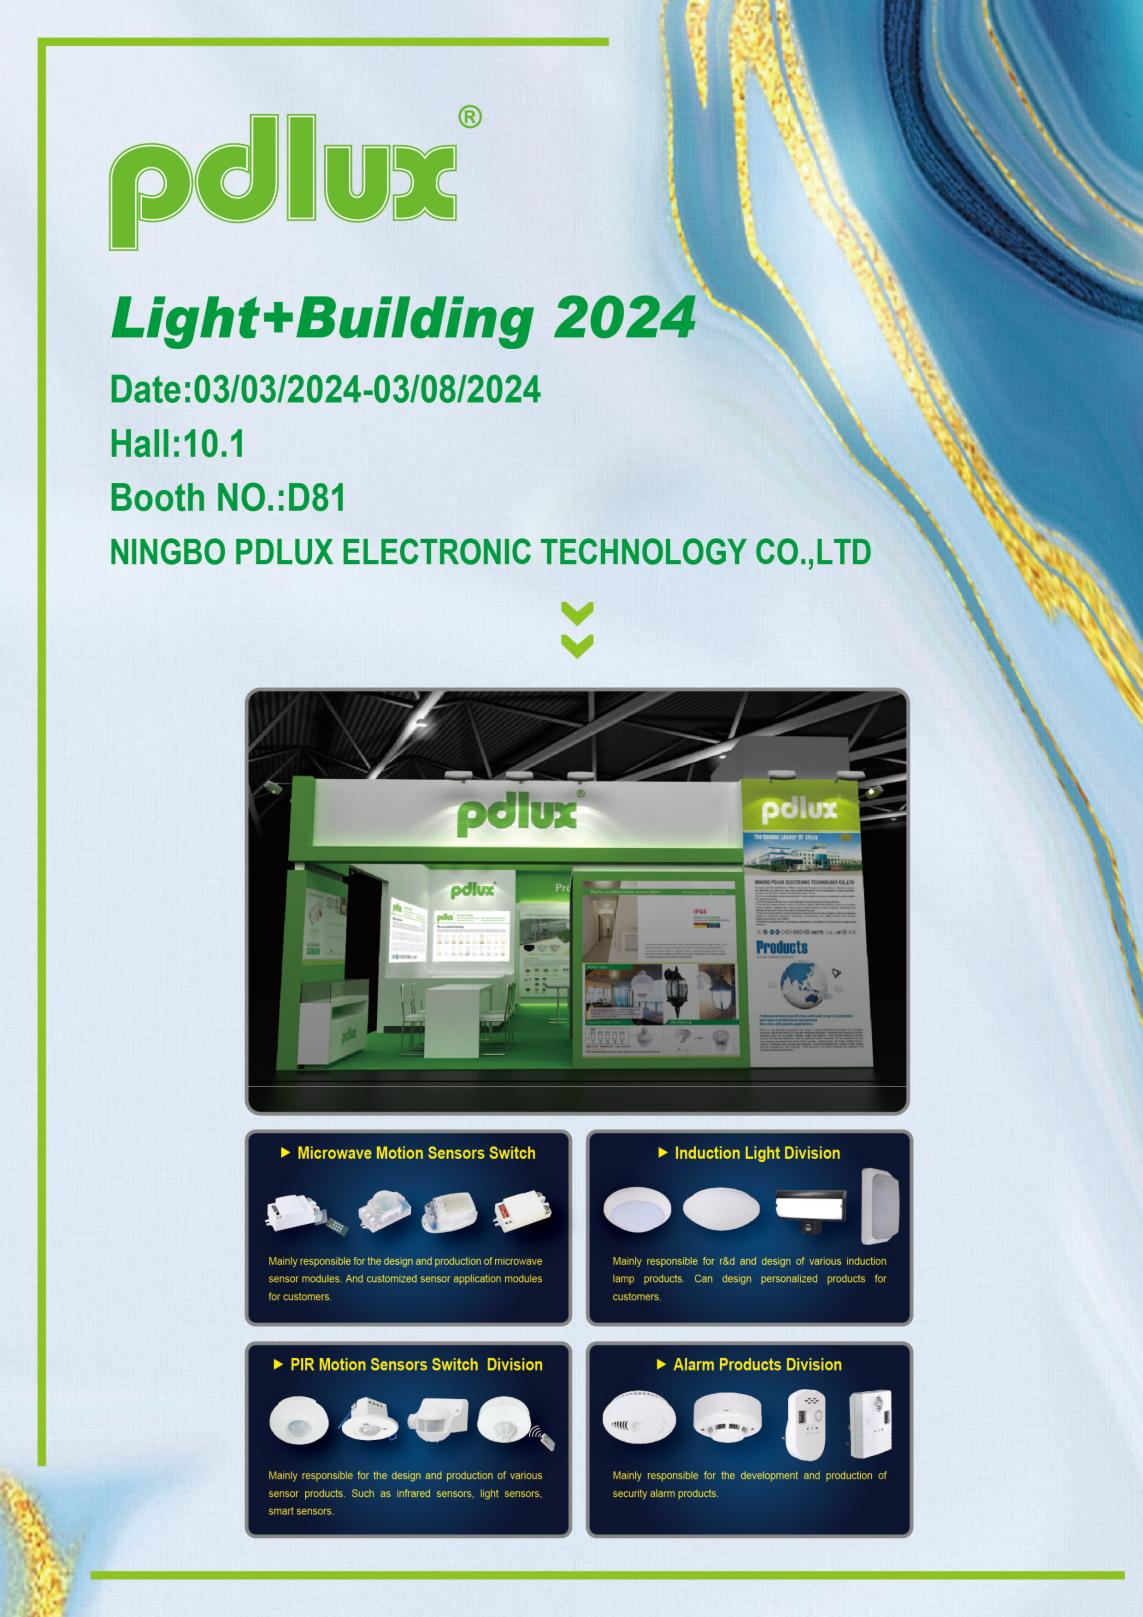 Taispeántais PDLUX ag Light + Architecture 2024